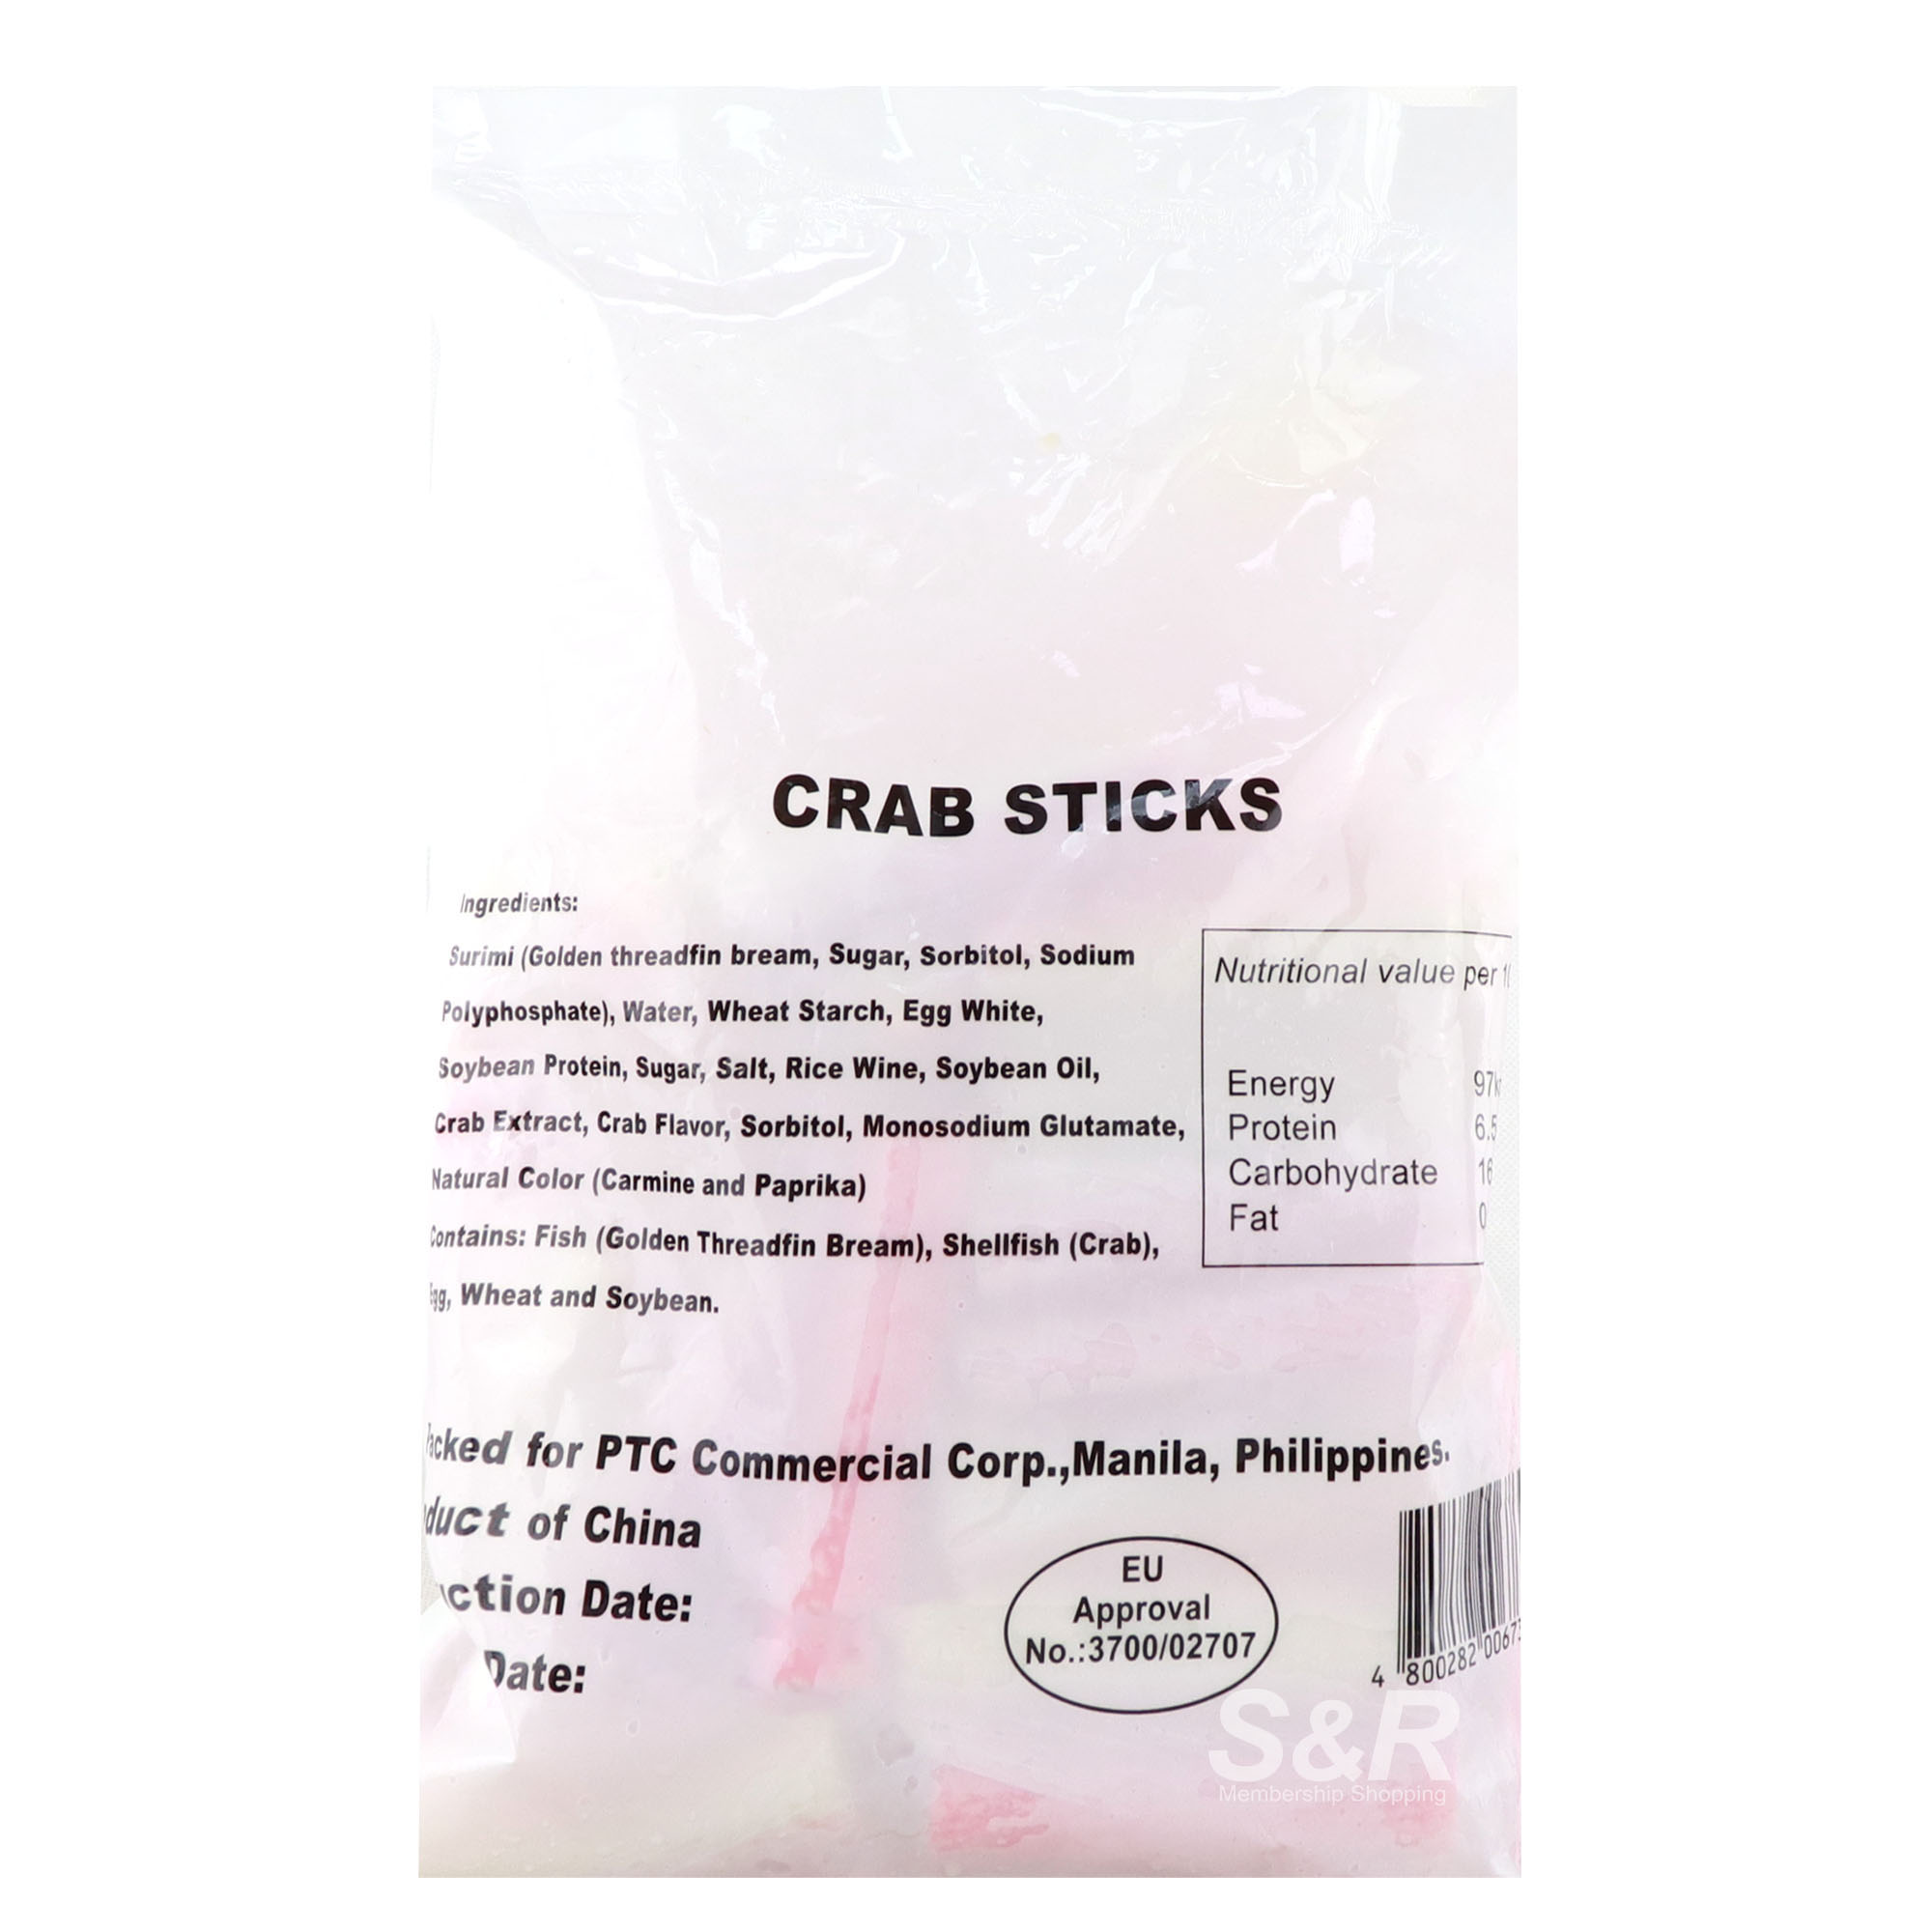 Crab sticks